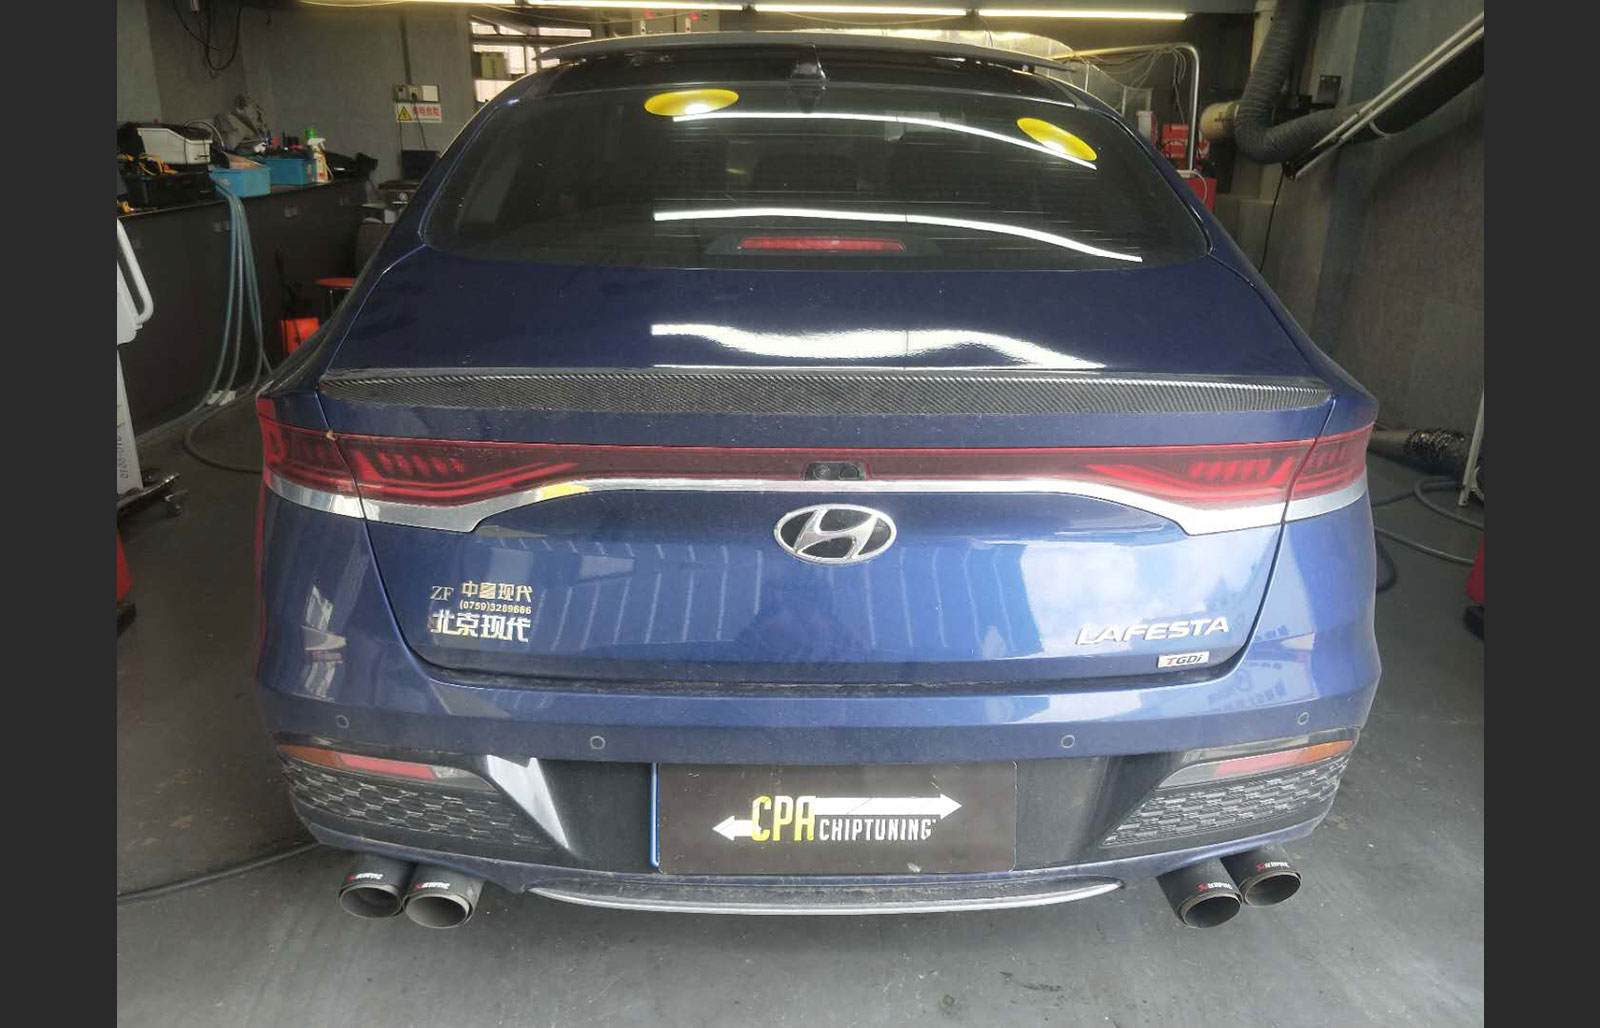 Hyundai Lafesta 1.6T chiptuning